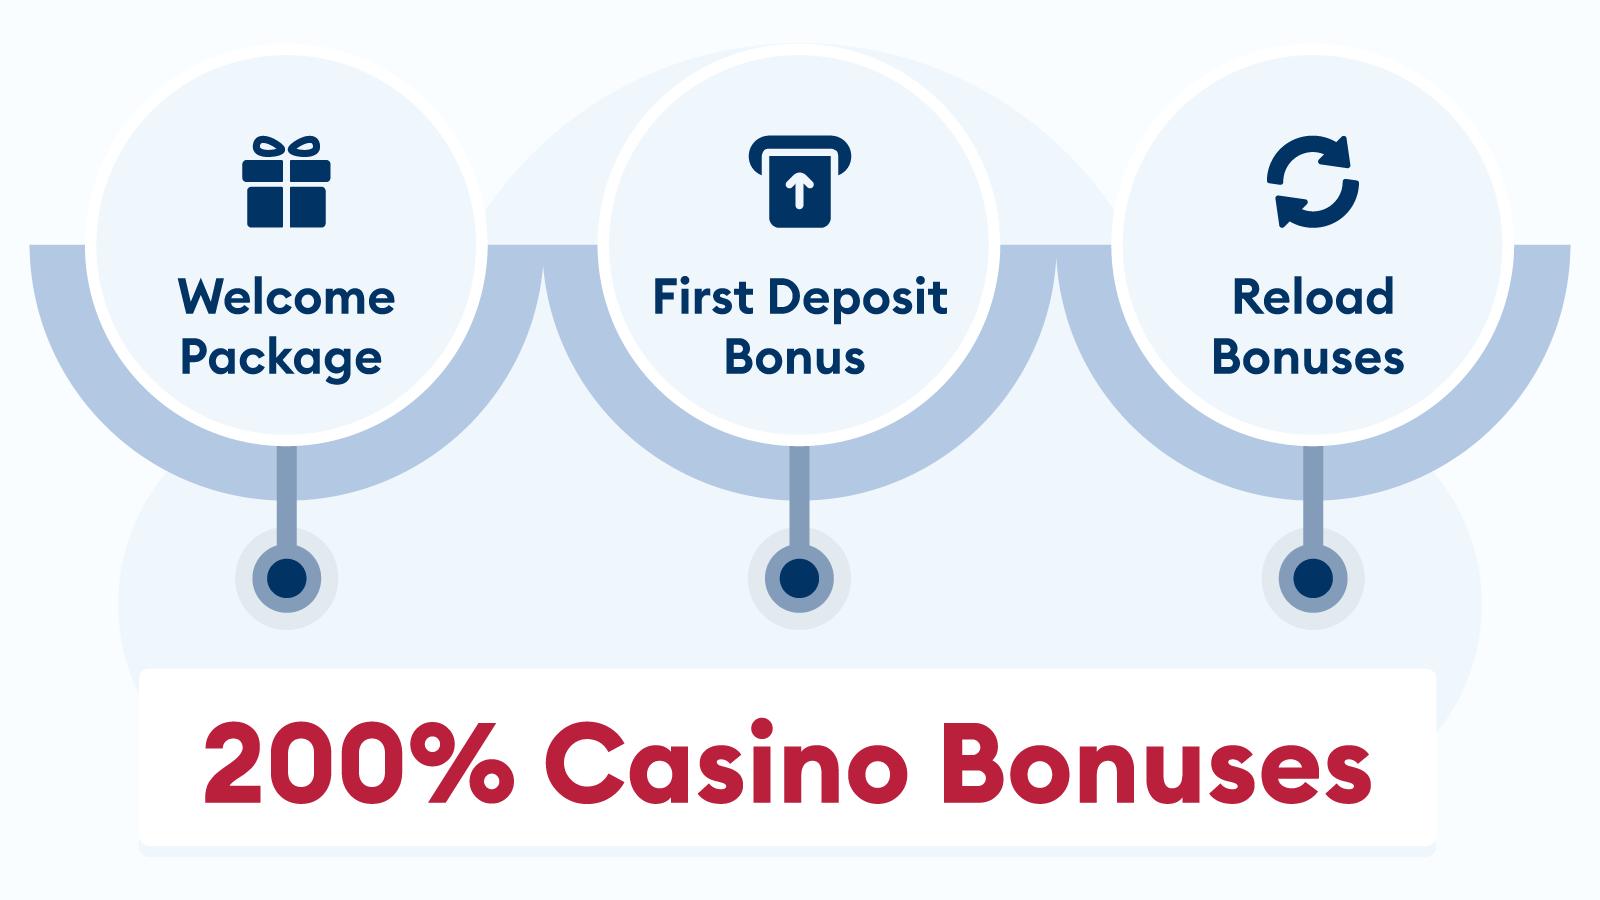 Main Types of 200% Casino Bonuses